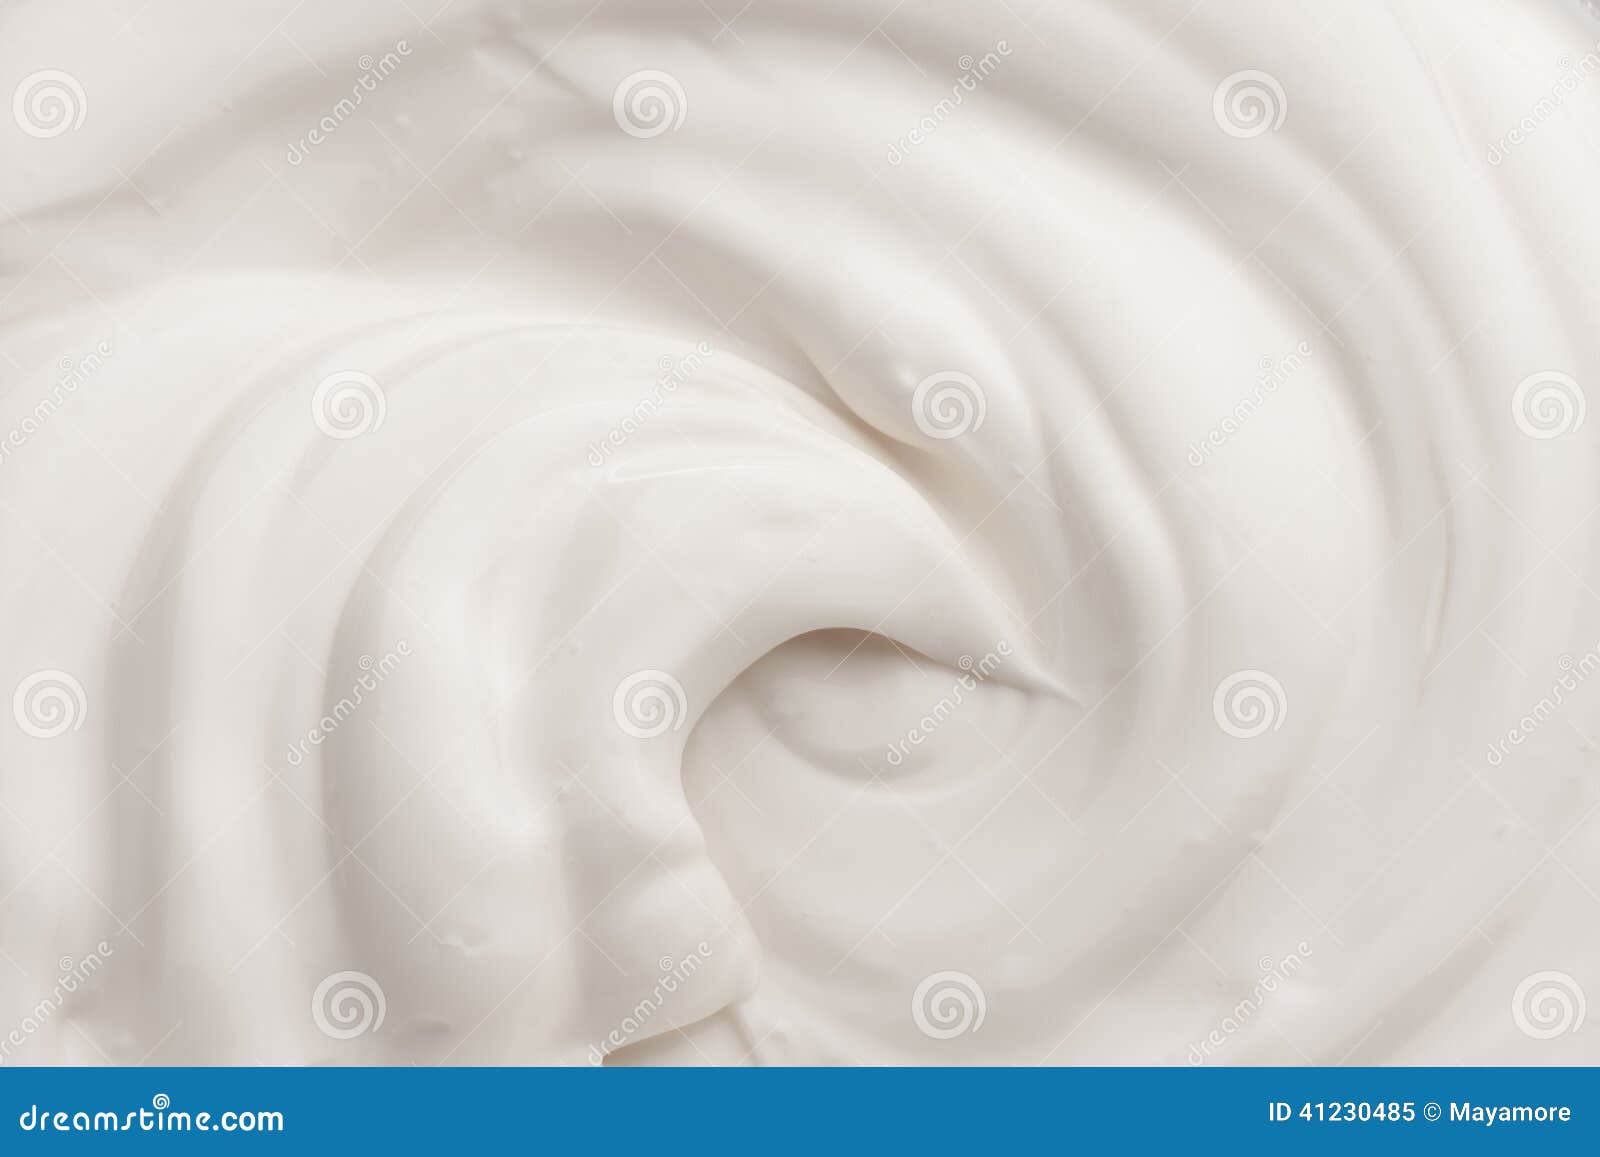 cream background